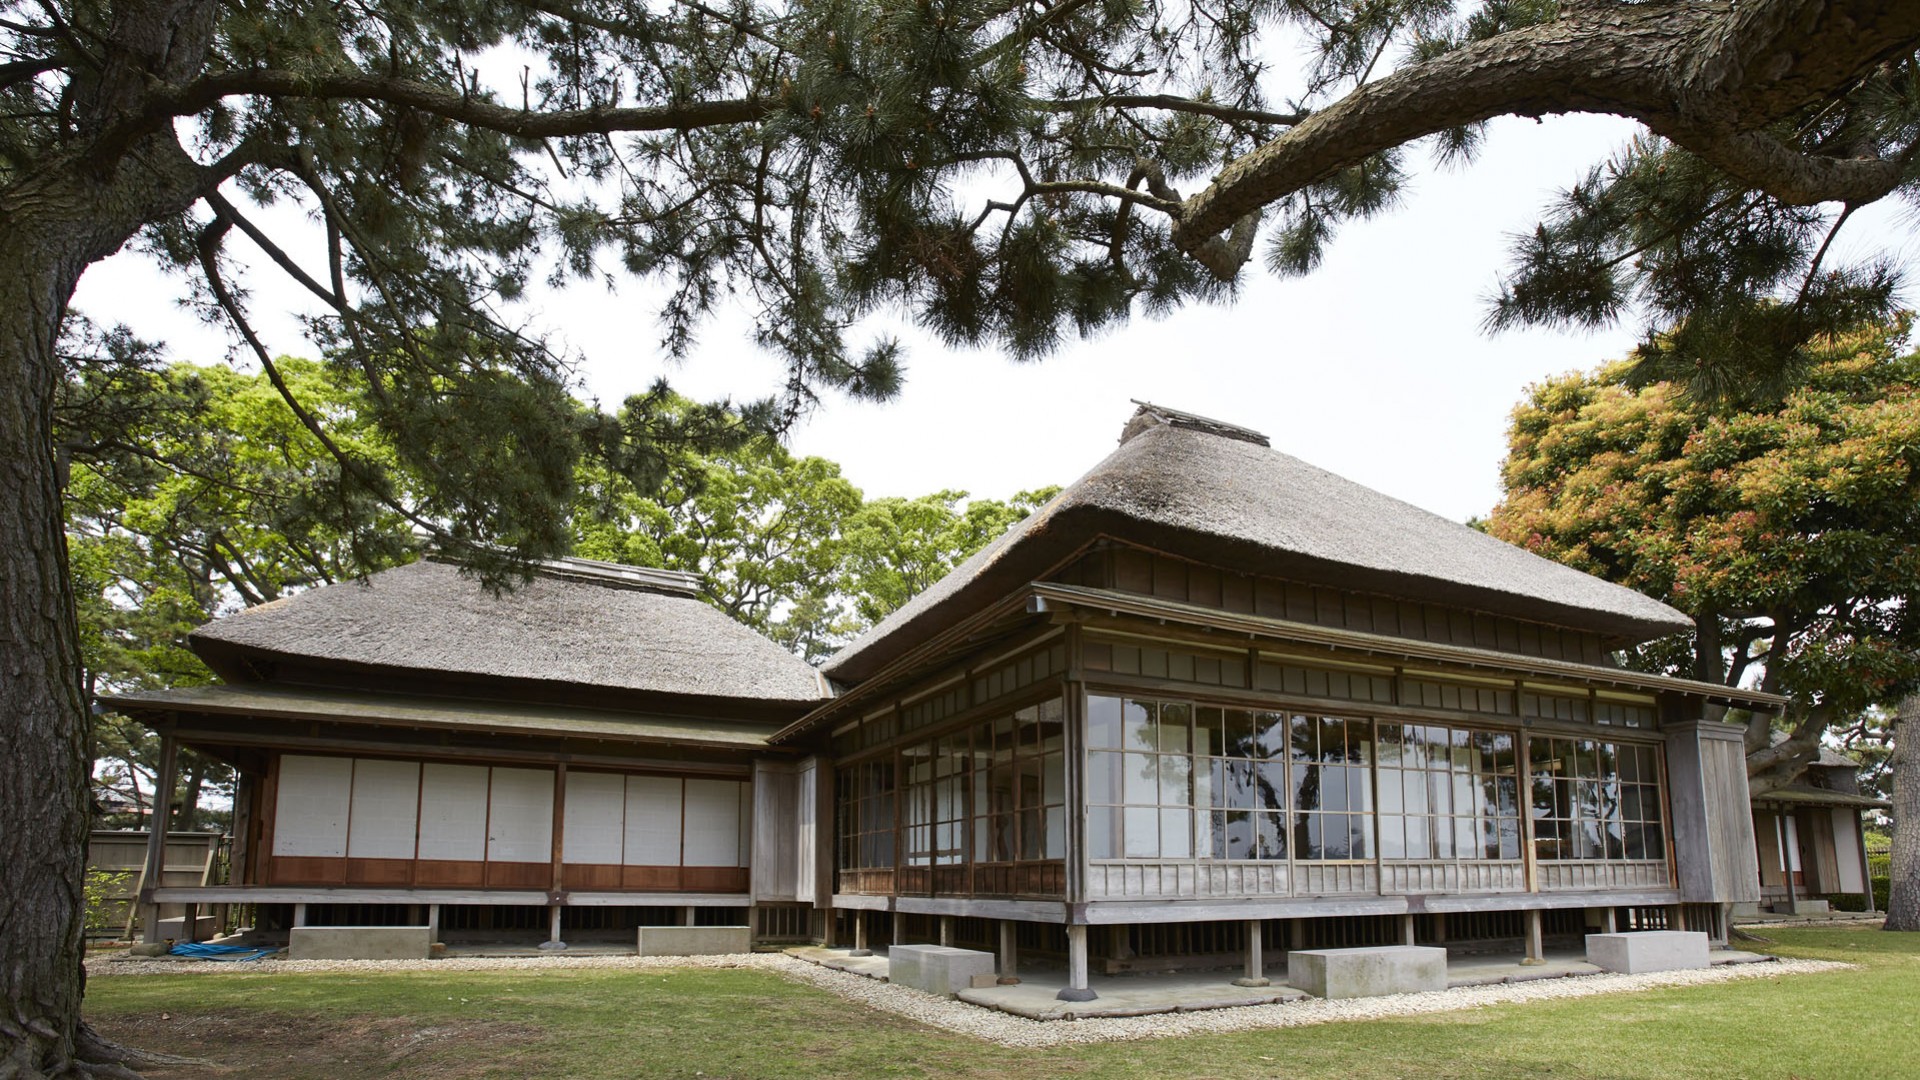 Ehemalige Kanazawa Residenz von Hirofumi Ito